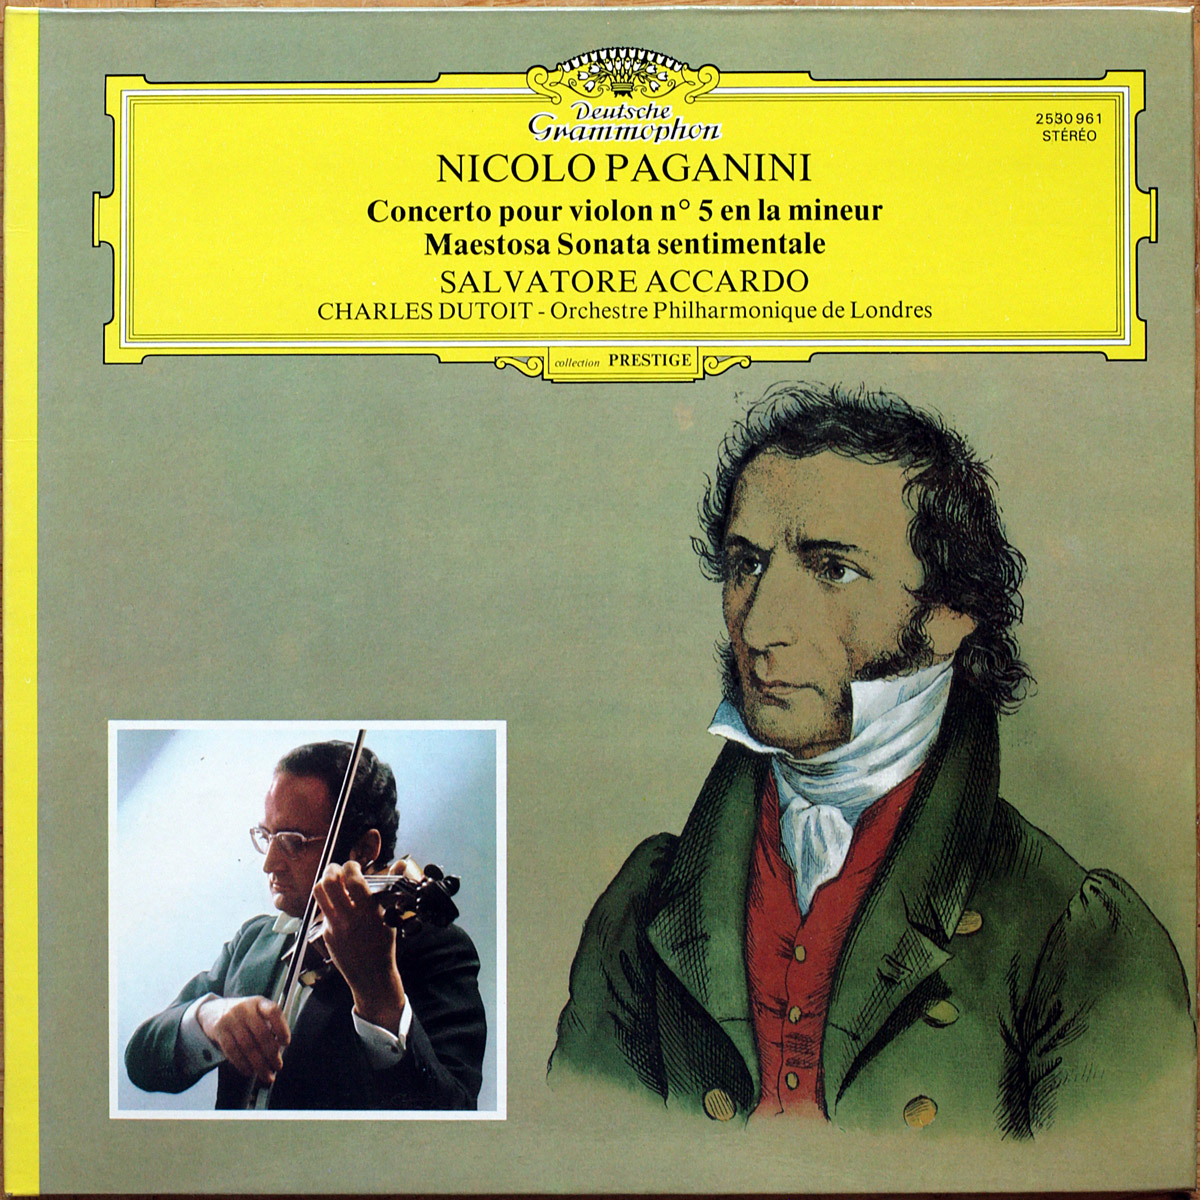 Paganini • Concerto pour violon n° 5 • Maestosa sonata sentimentale • DGG 2530 961 • Salvatore Accardo • London Philharmonic Orchestra • Charles Dutoit